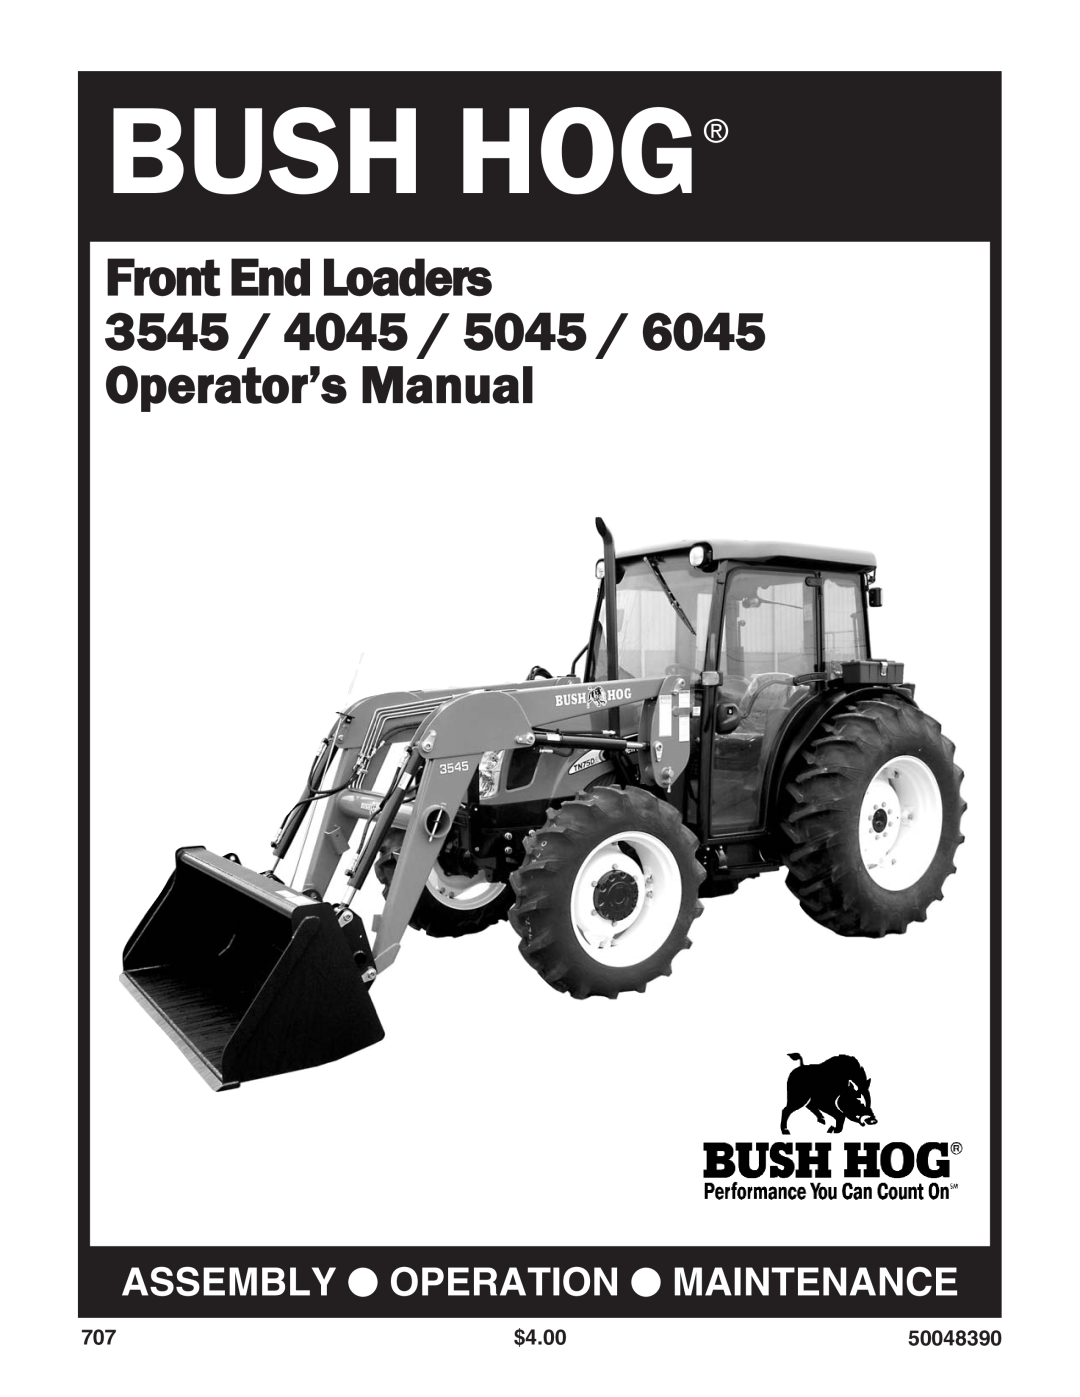 Bush Hog manual FrontEndLoaders 3545 / 4045 / 5045 / 6045 Operator’s Manual, Bush Hog, Assembly Operation Maintenance 